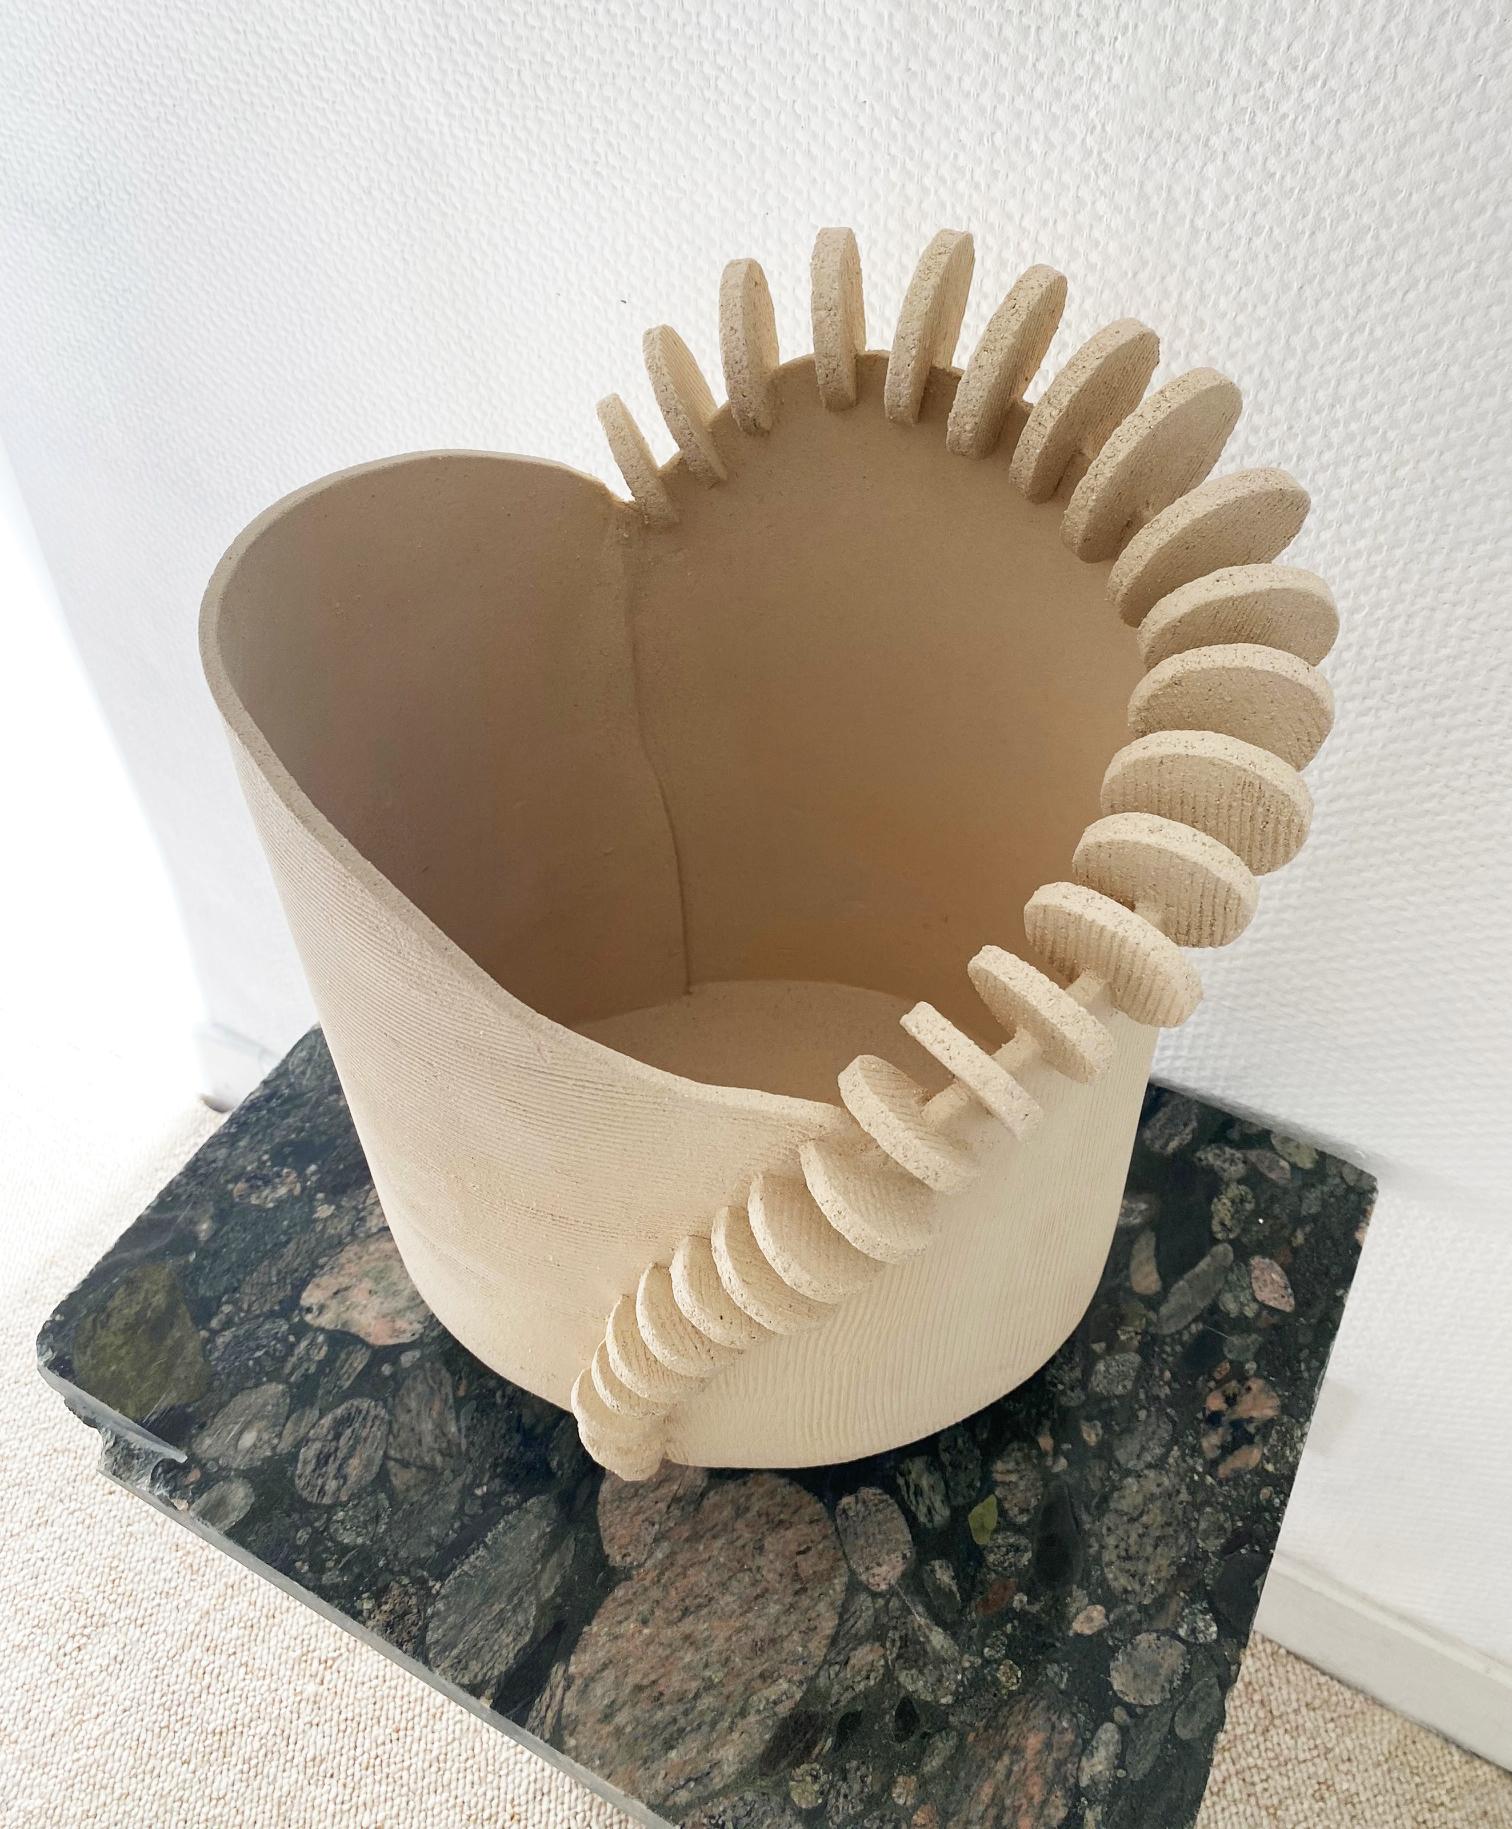 Clay Medium Tempo Sculpture by Olivia Cognet